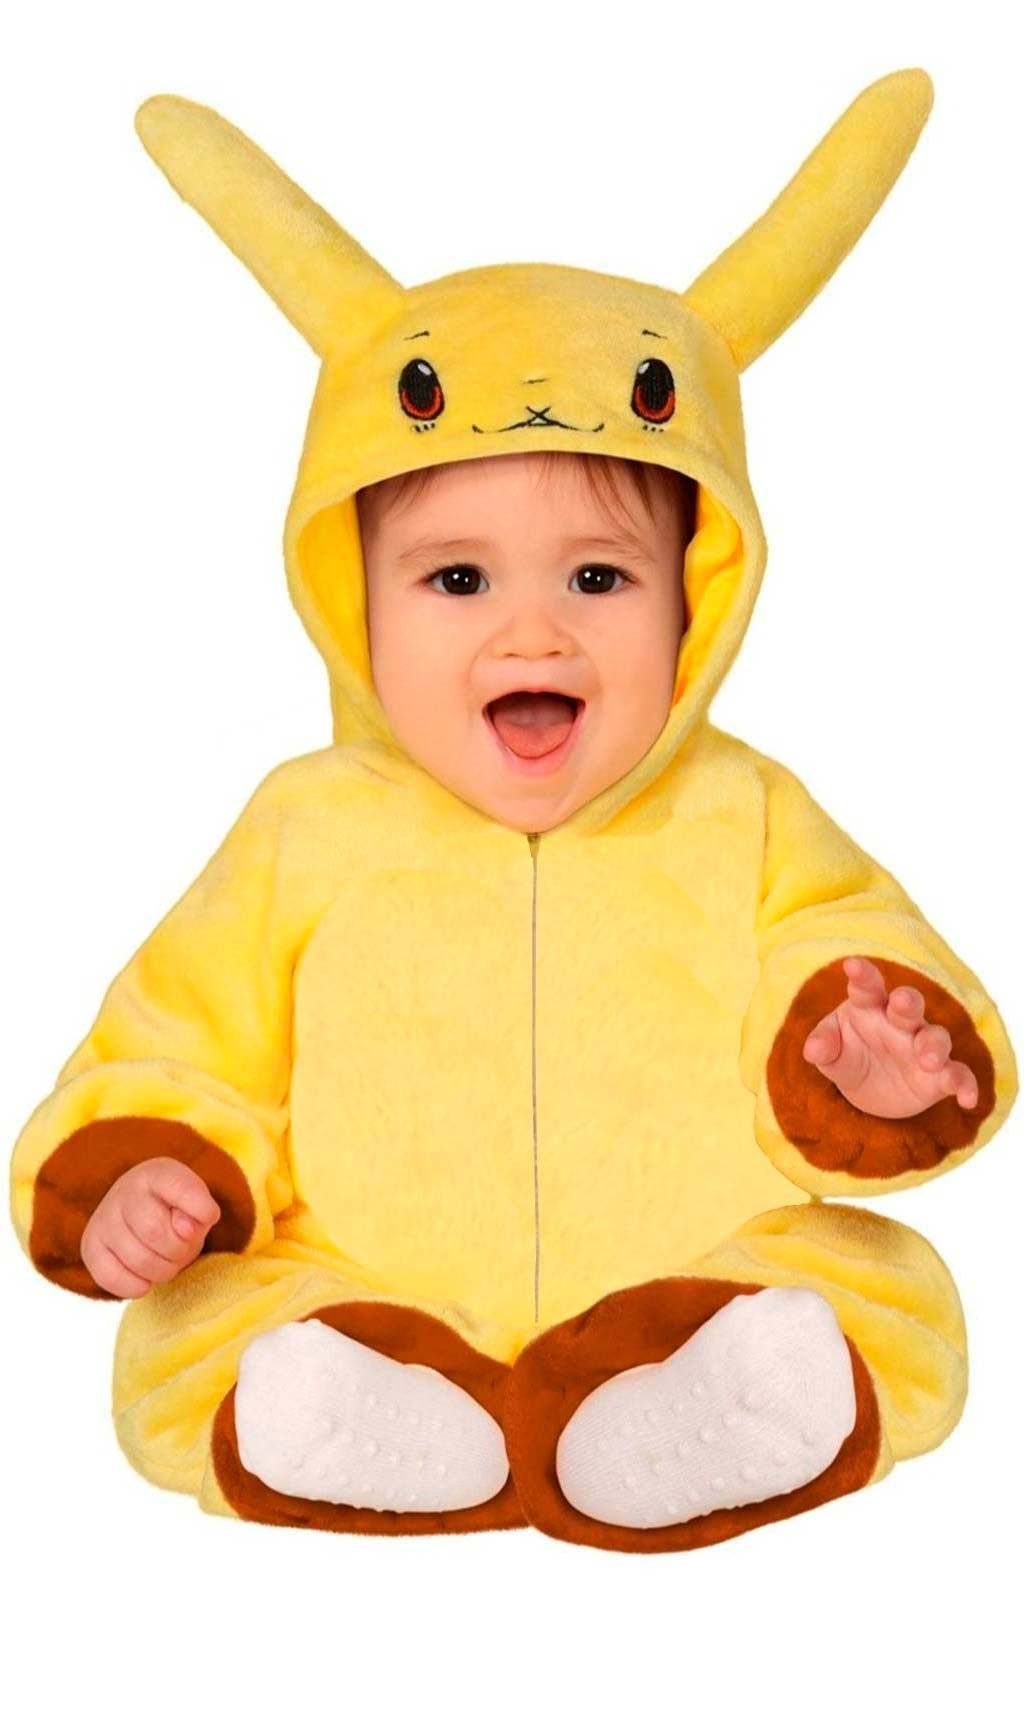 Costume da Pikachu Pokémon per bambino